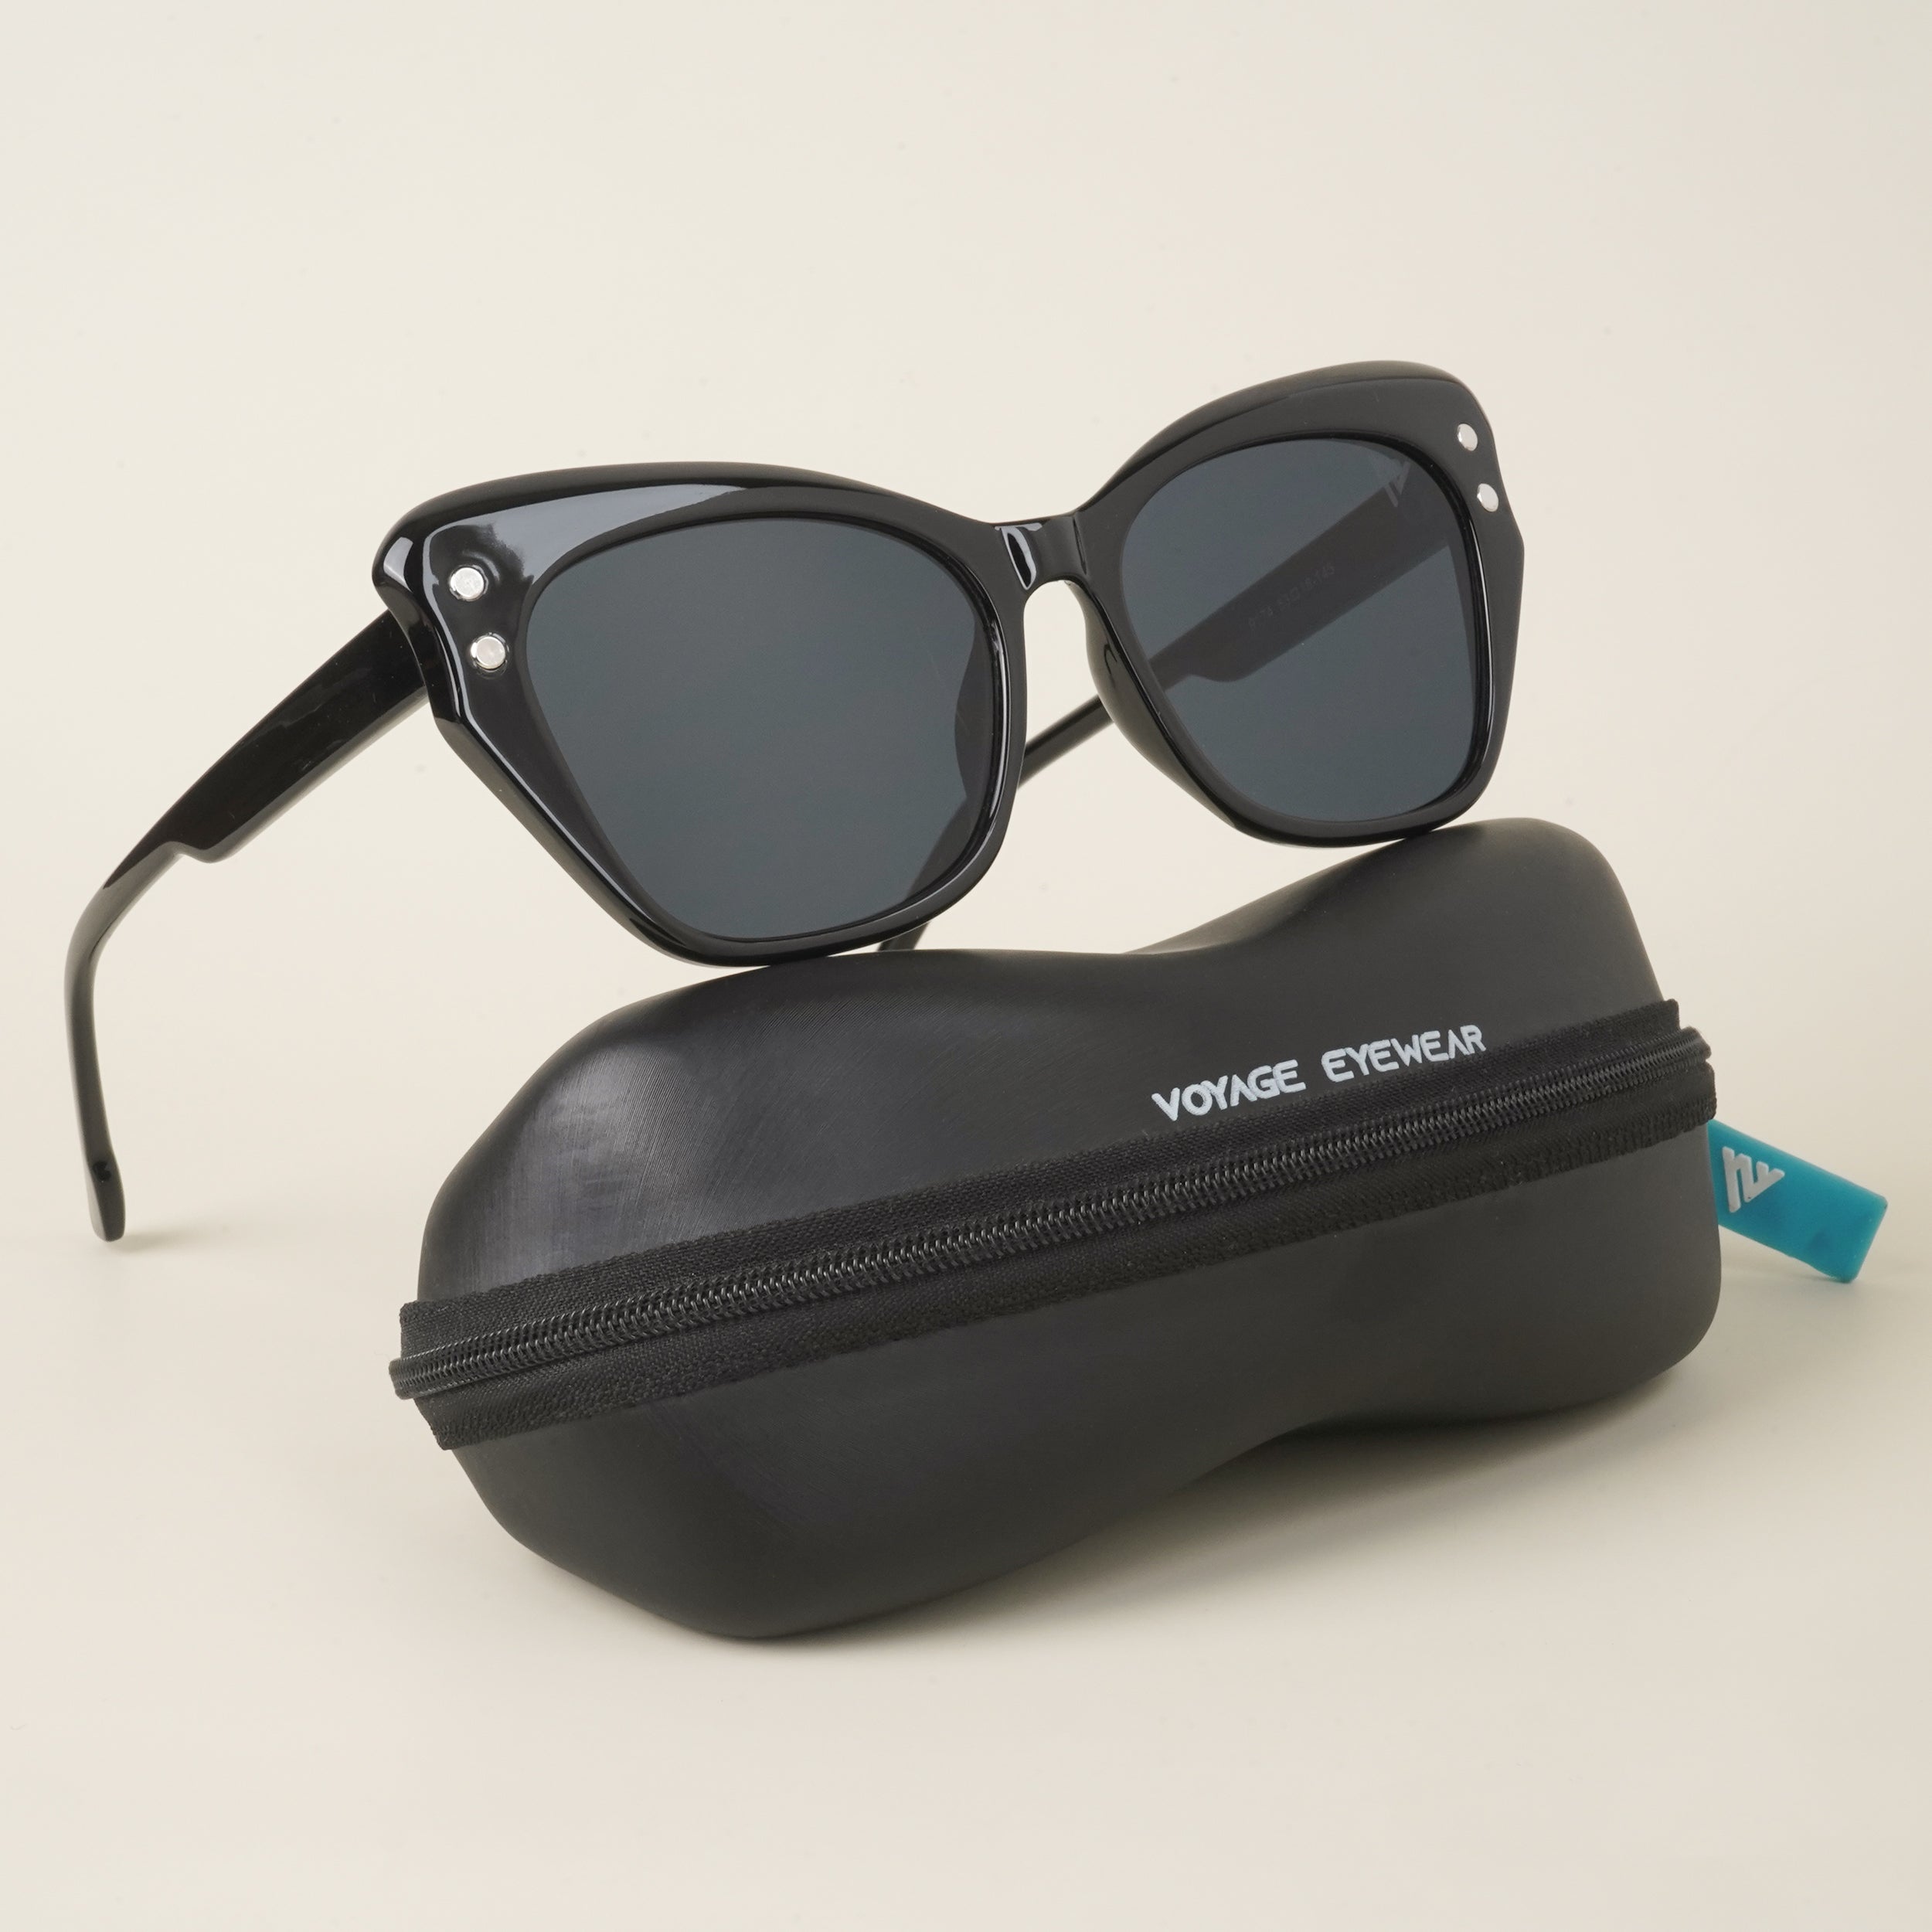 Voyage Black Cateye Sunglasses for Women (9174MG4107)